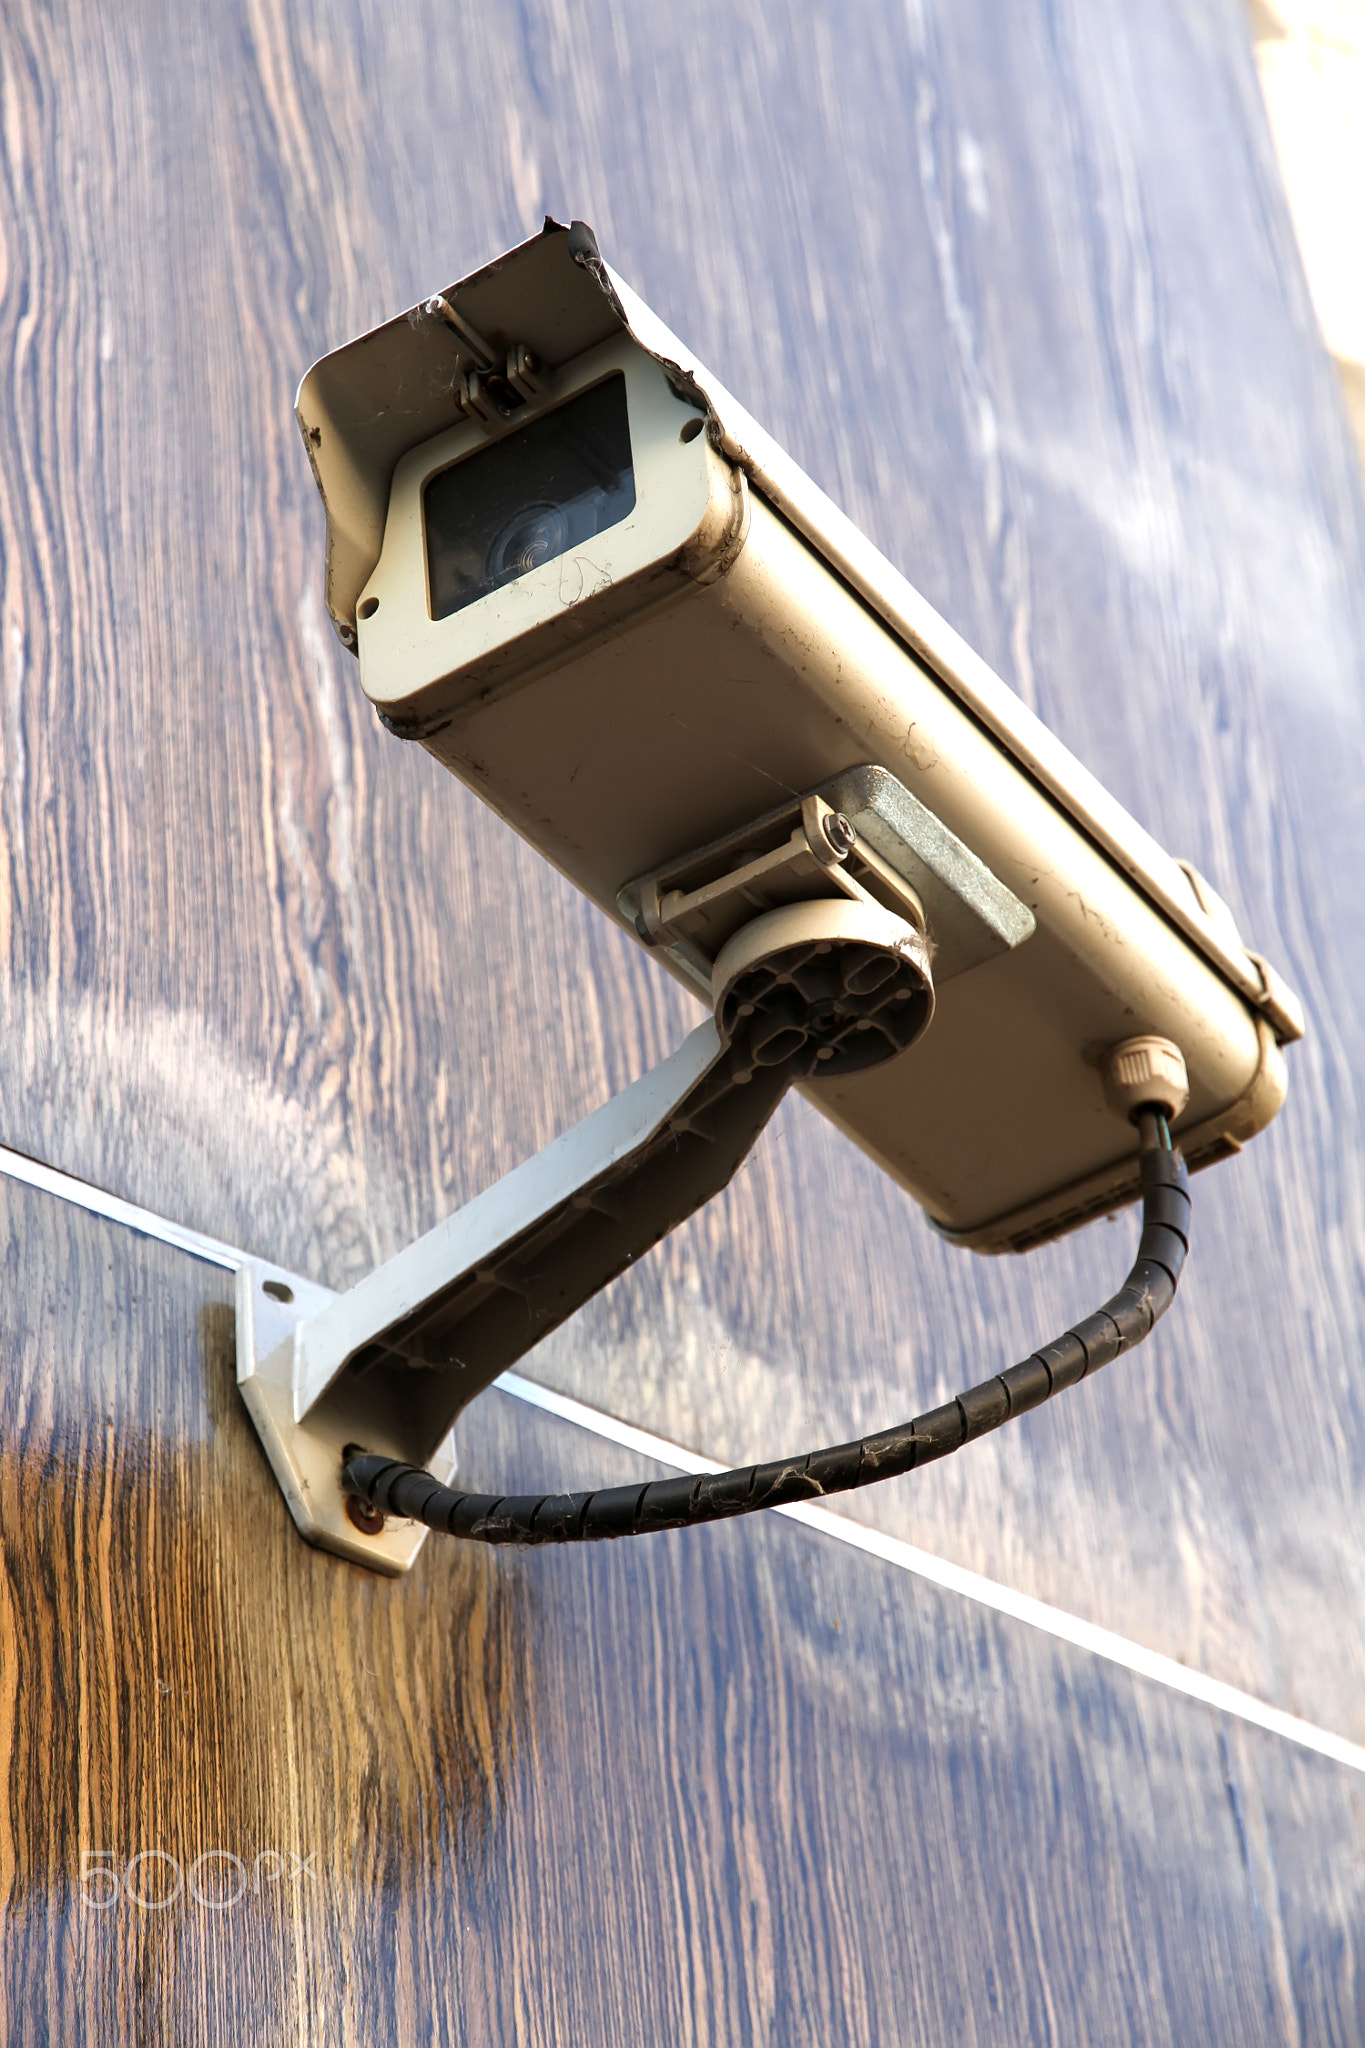 CCTV Surveillance cam